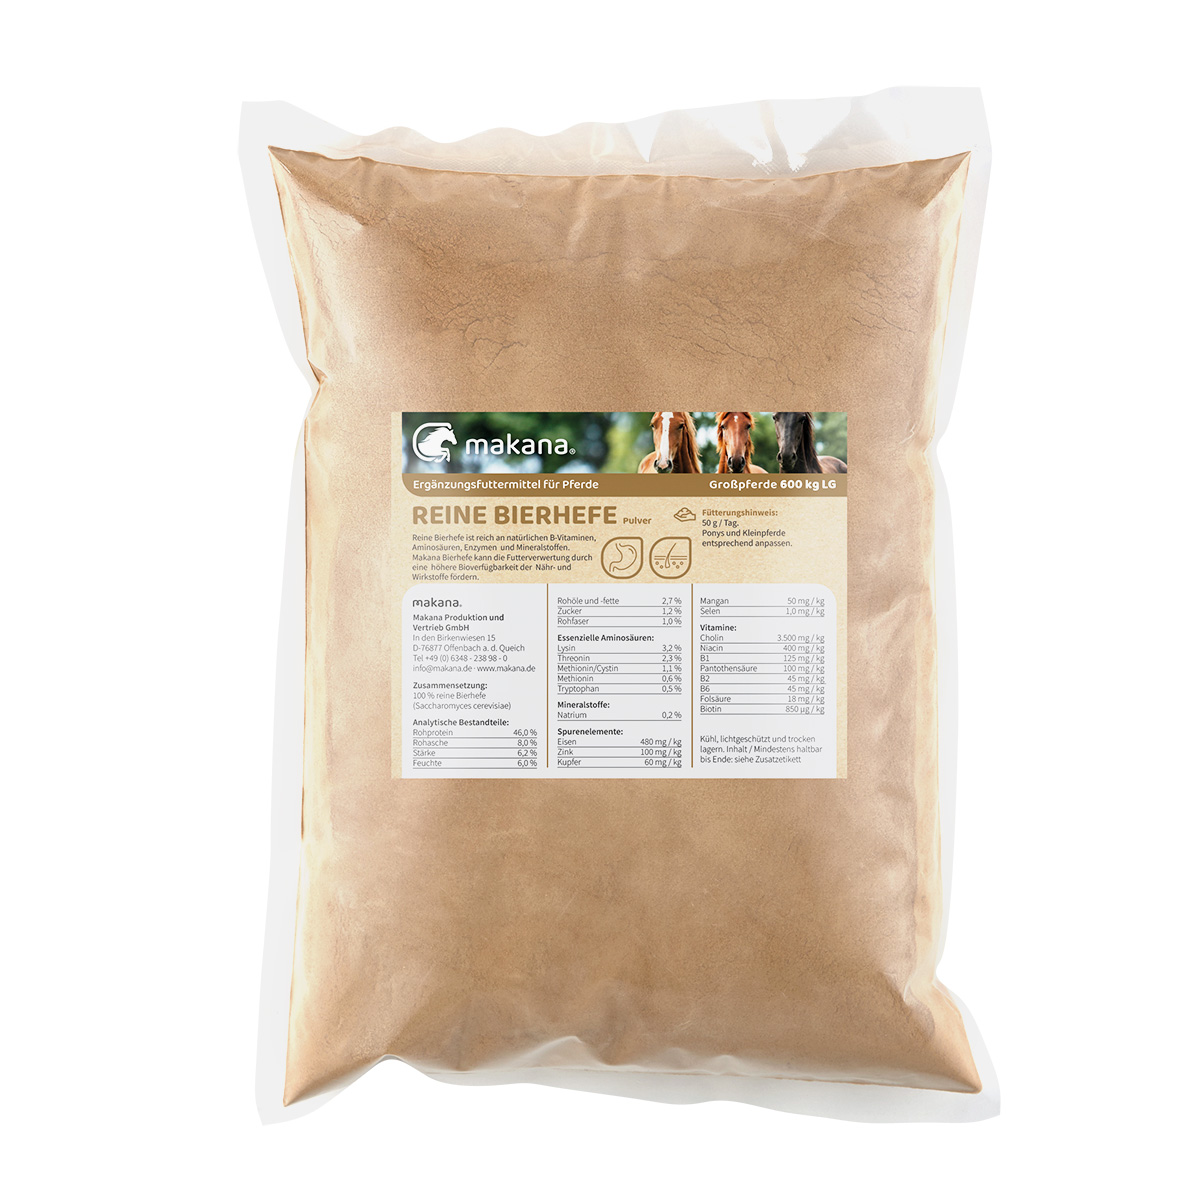 Makan pure brewer's yeast 3kg bag